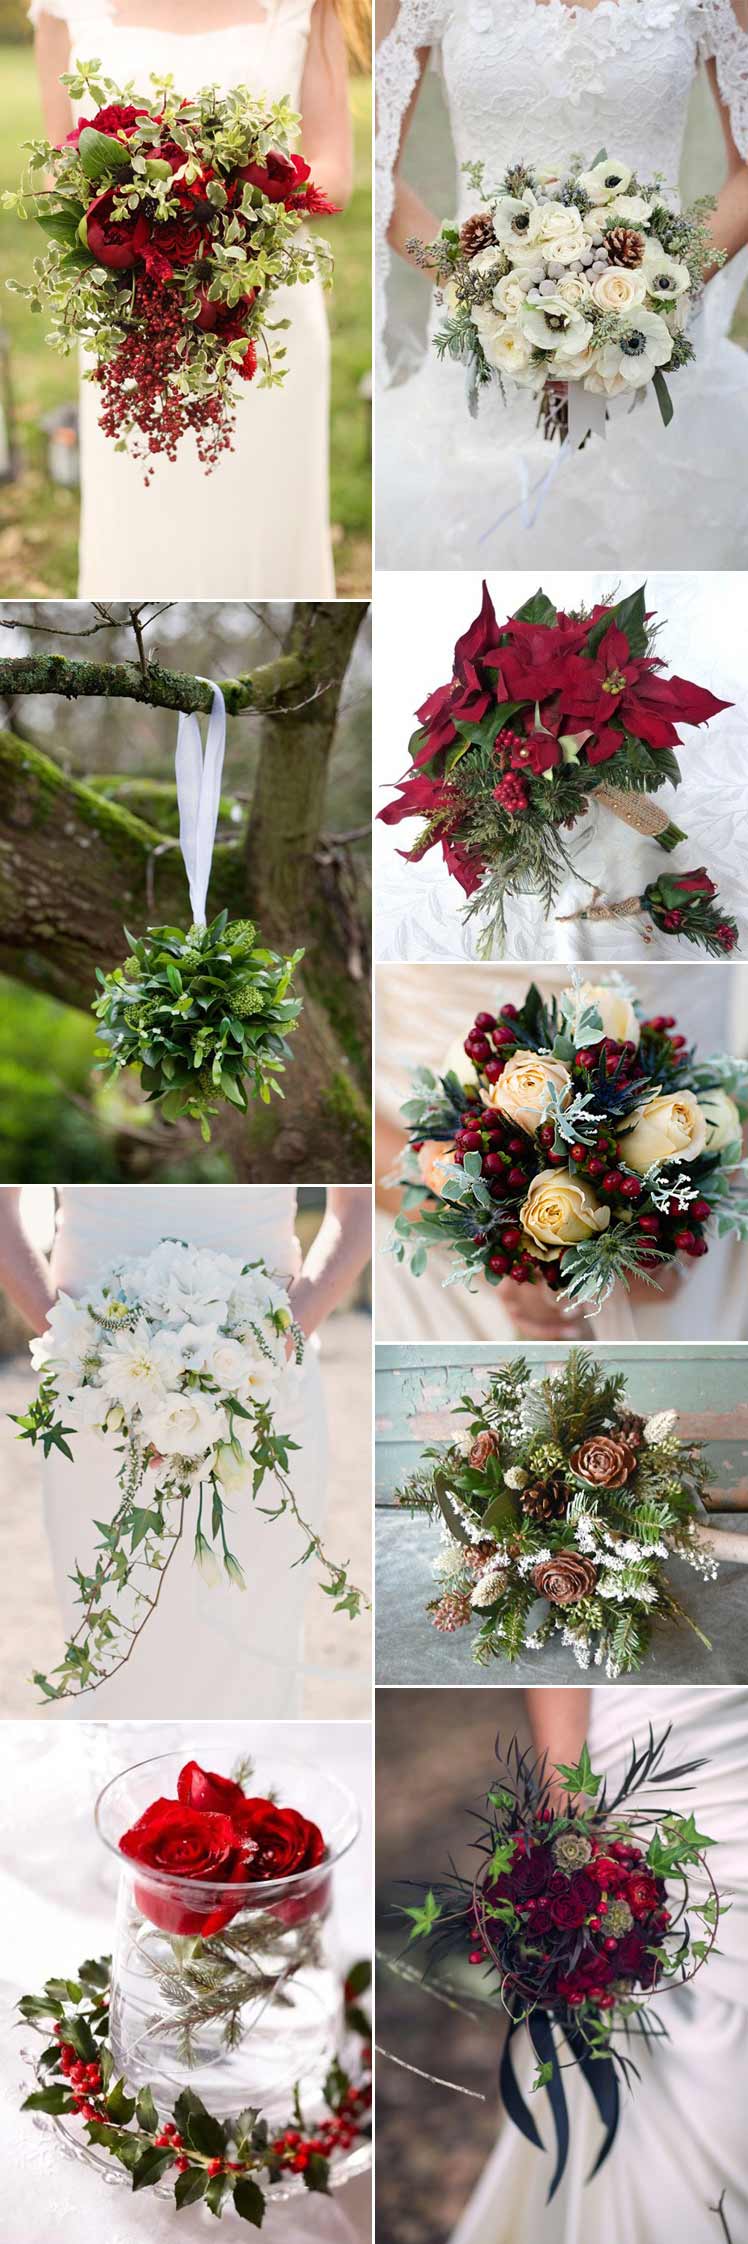 Christmas wedding flowers inspiration